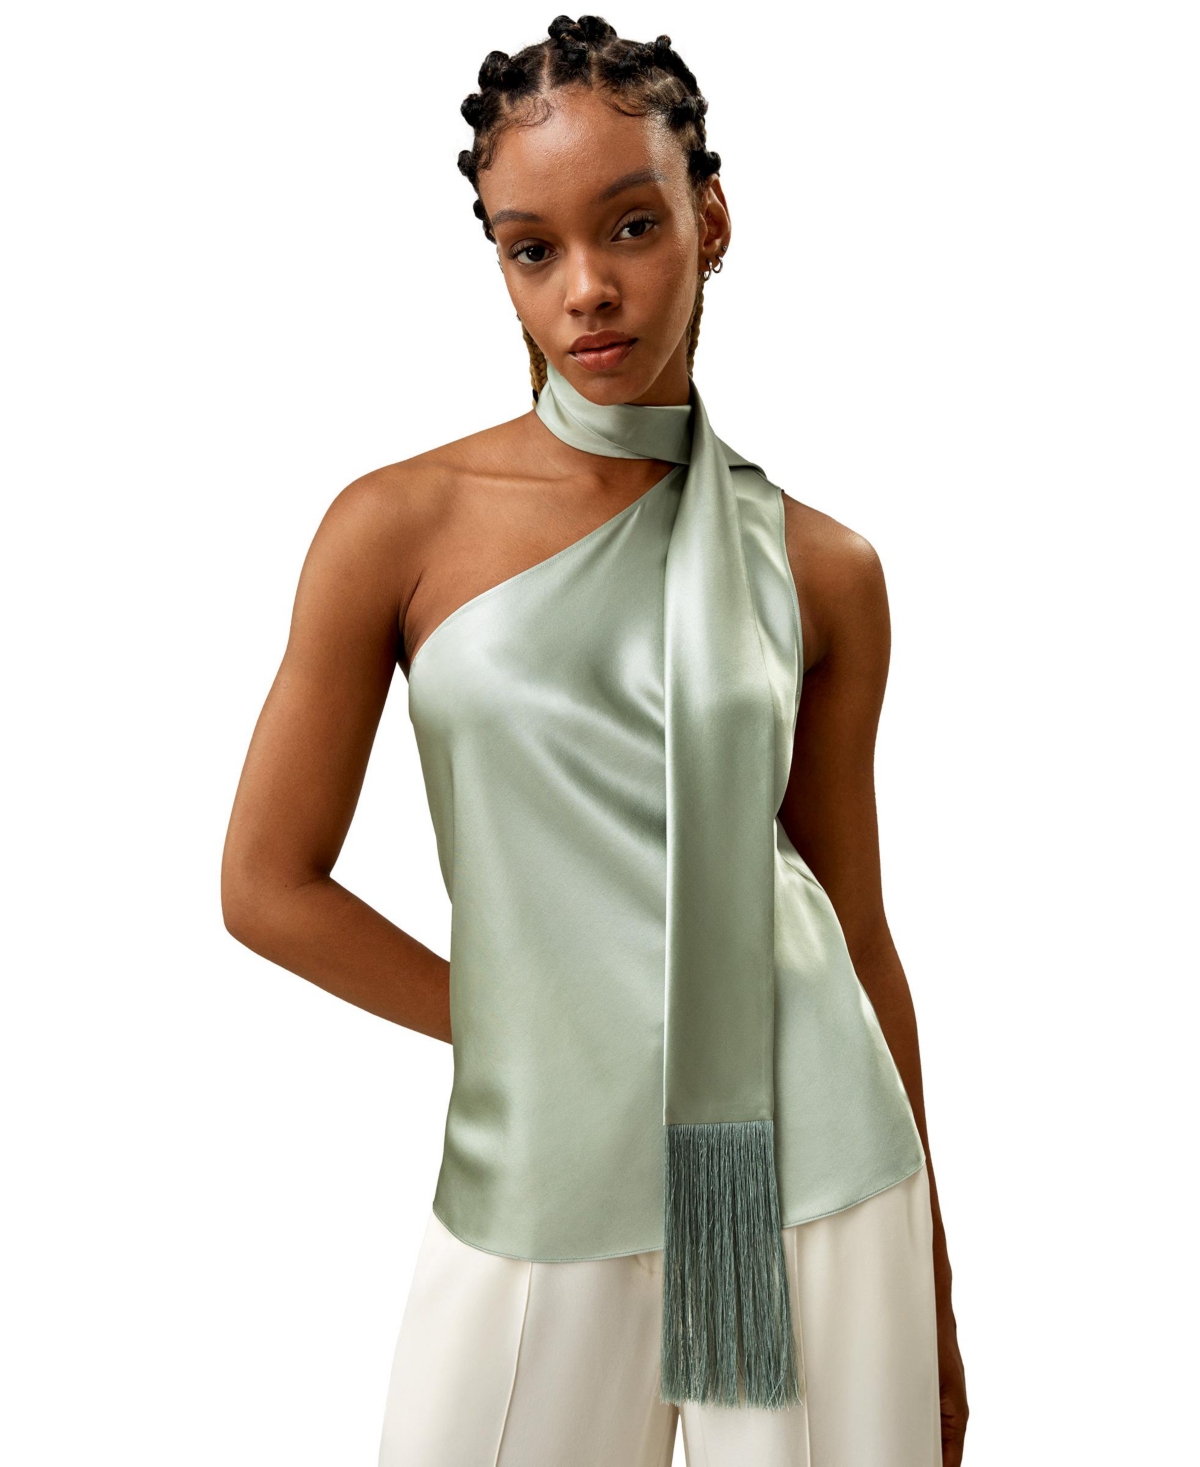 Women's One-shoulder Top With Tassel Scarf for Women - Aqua green